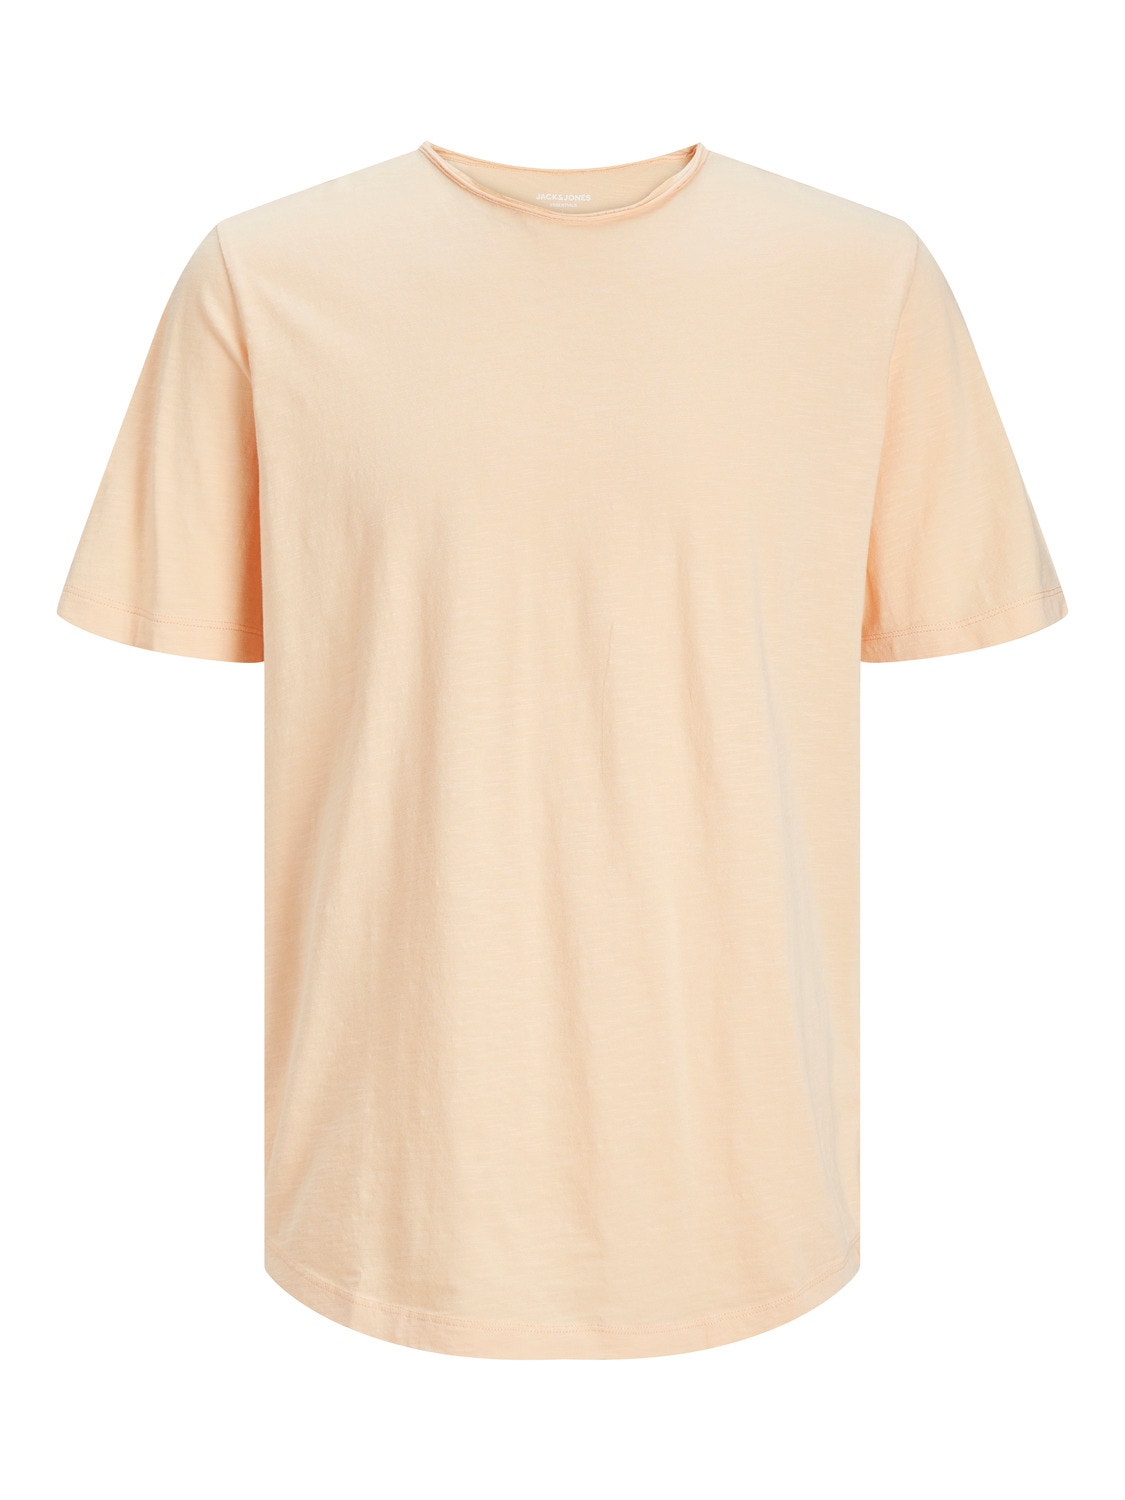 Jack & Jones Plain Crew neck T-shirt -Apricot Ice  - 12182498